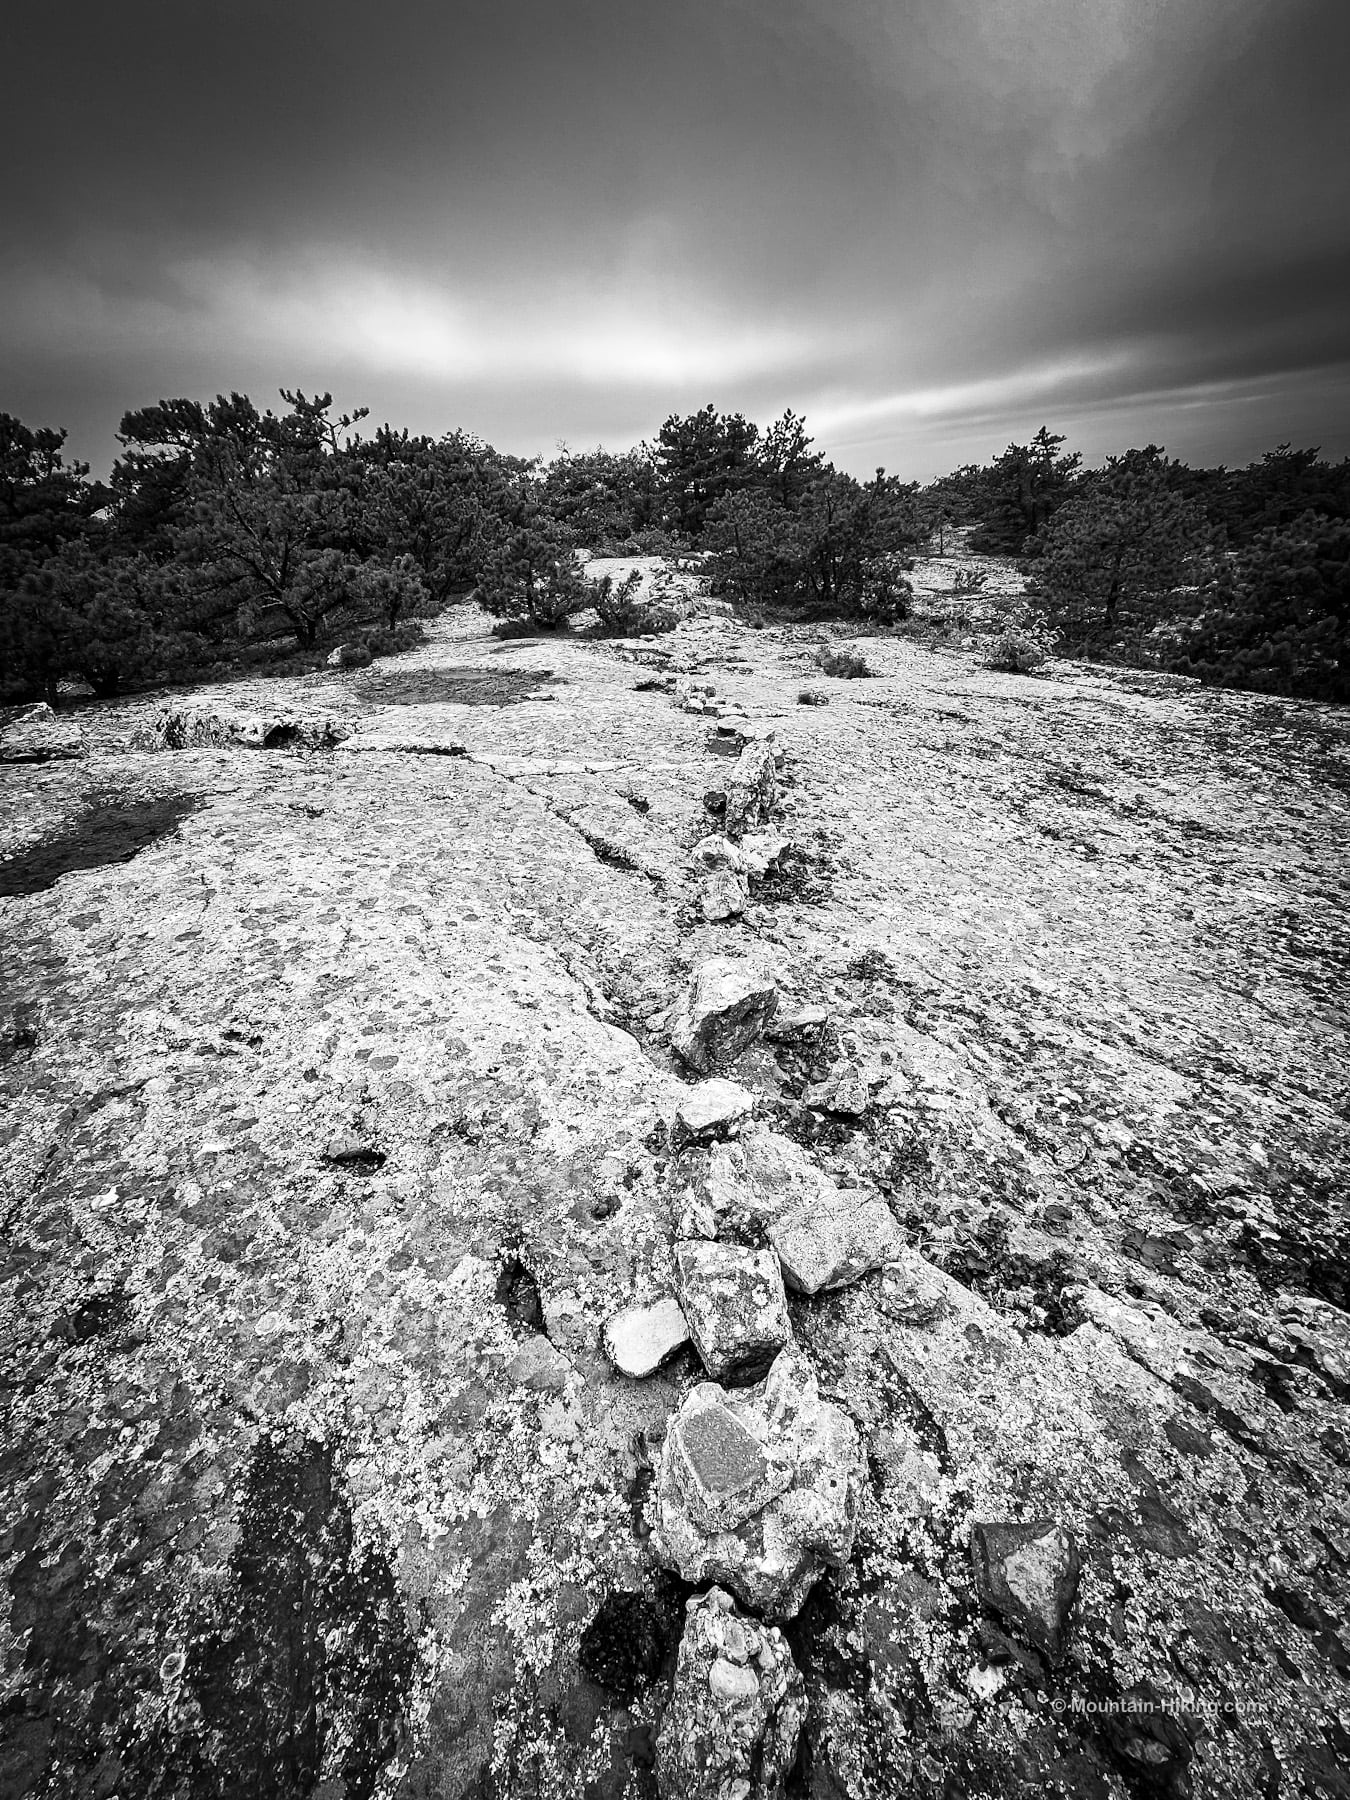 cairns on open rock